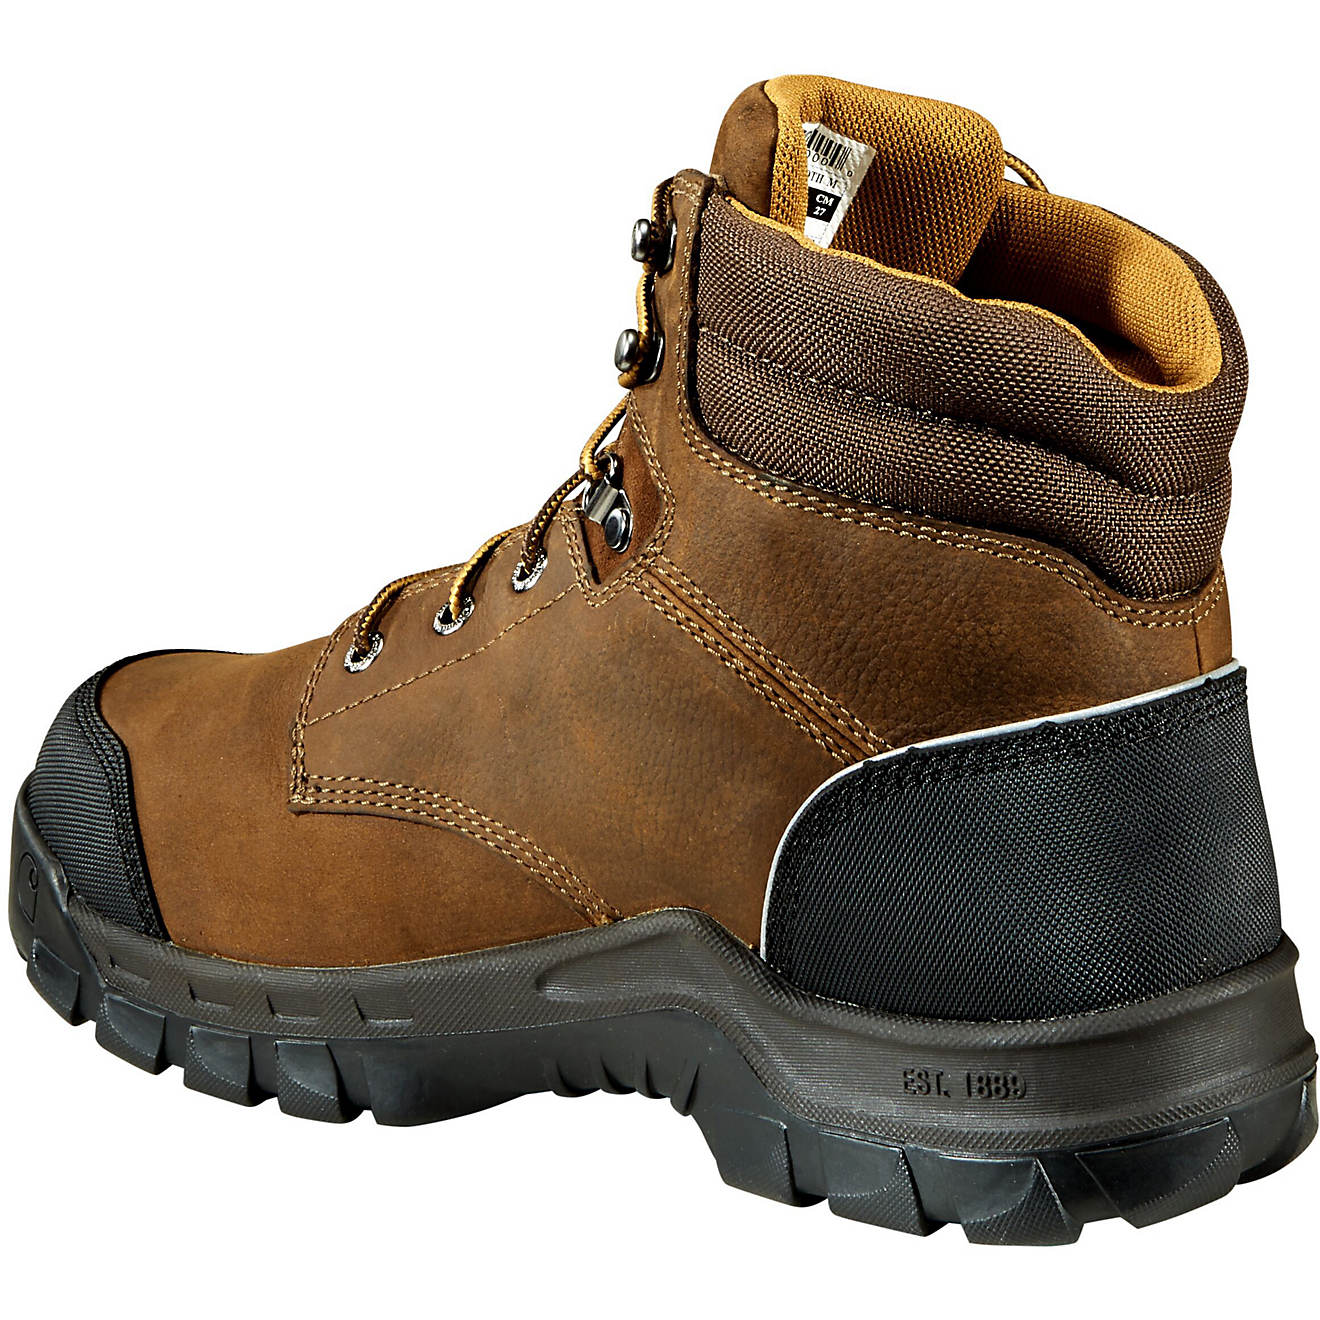 Carhartt Men's Rugged Flex Met Guard Composite Toe Lace Up Work Boots ...